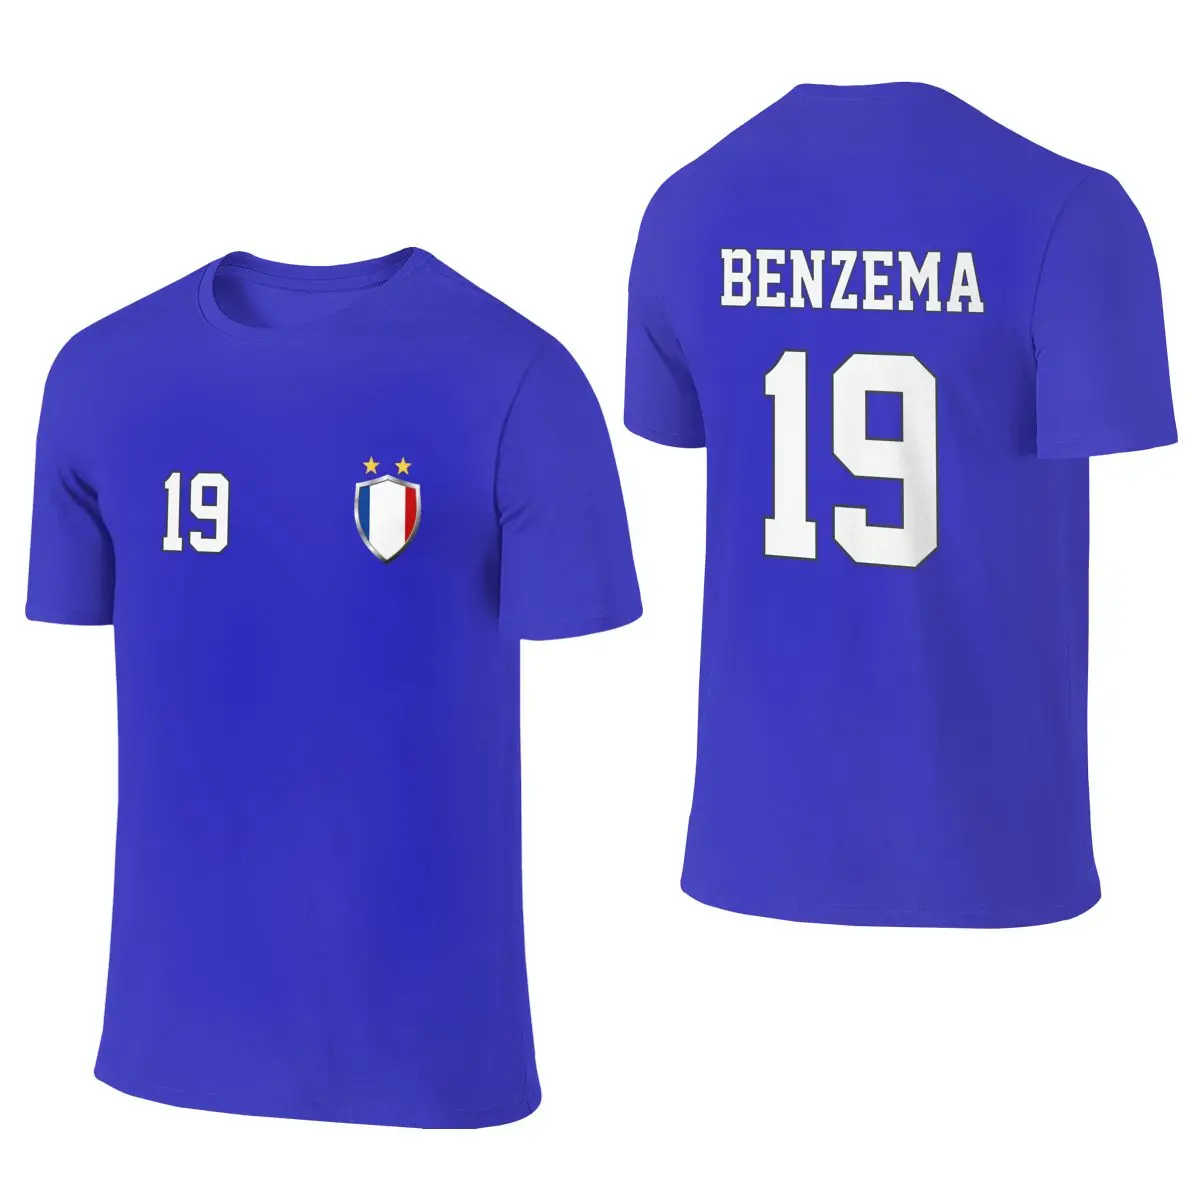 2022 France Benzema T Shirts Fashion Men Women Soccer T-Shirt Hip Hop Tops  Cotton Tees